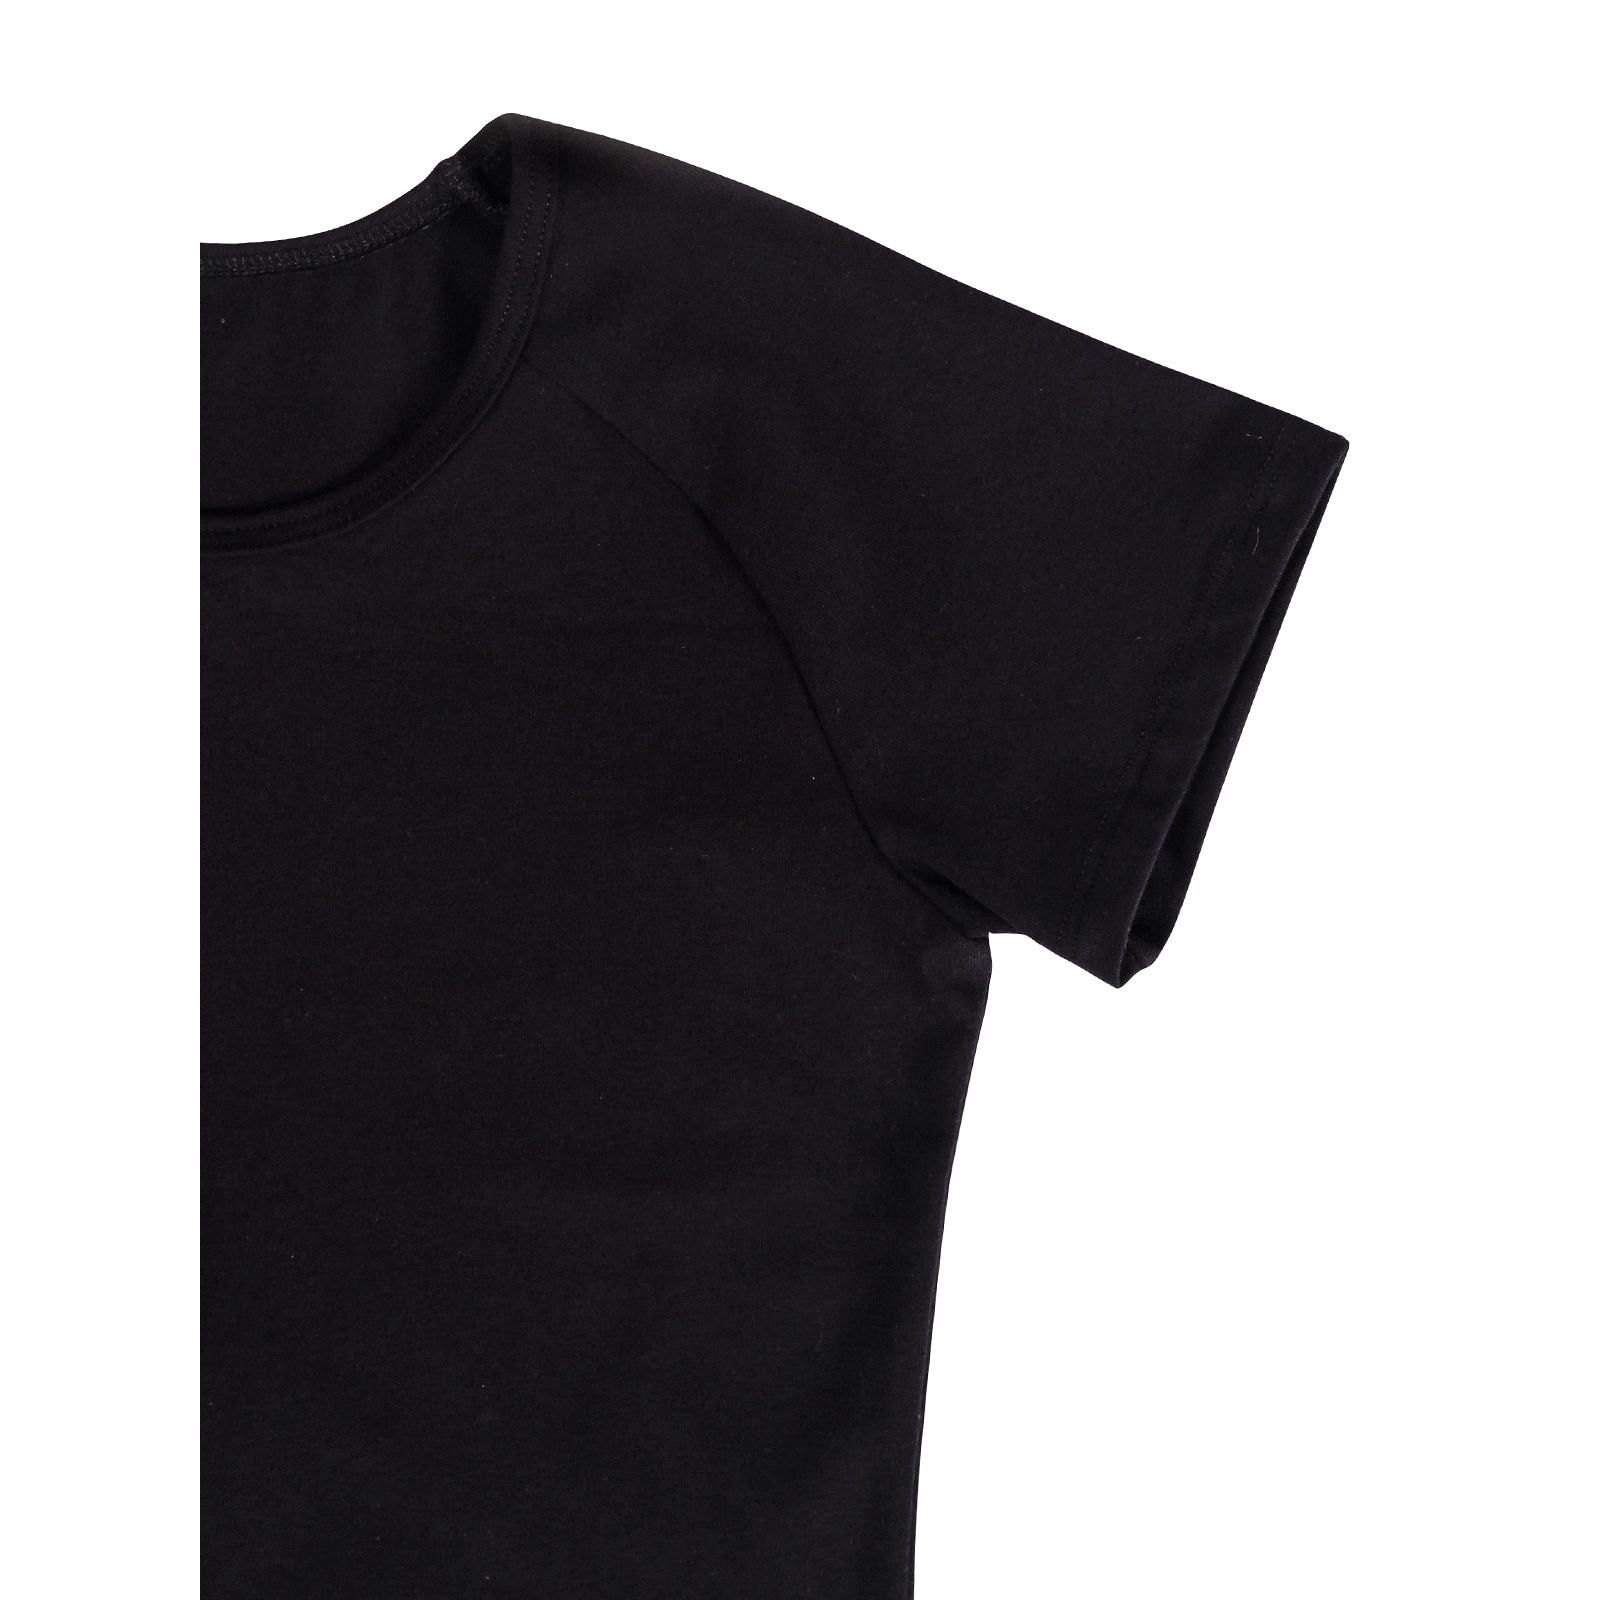 Camiseta Mangas Raglán de Algodón SOLO Negro Talla 36